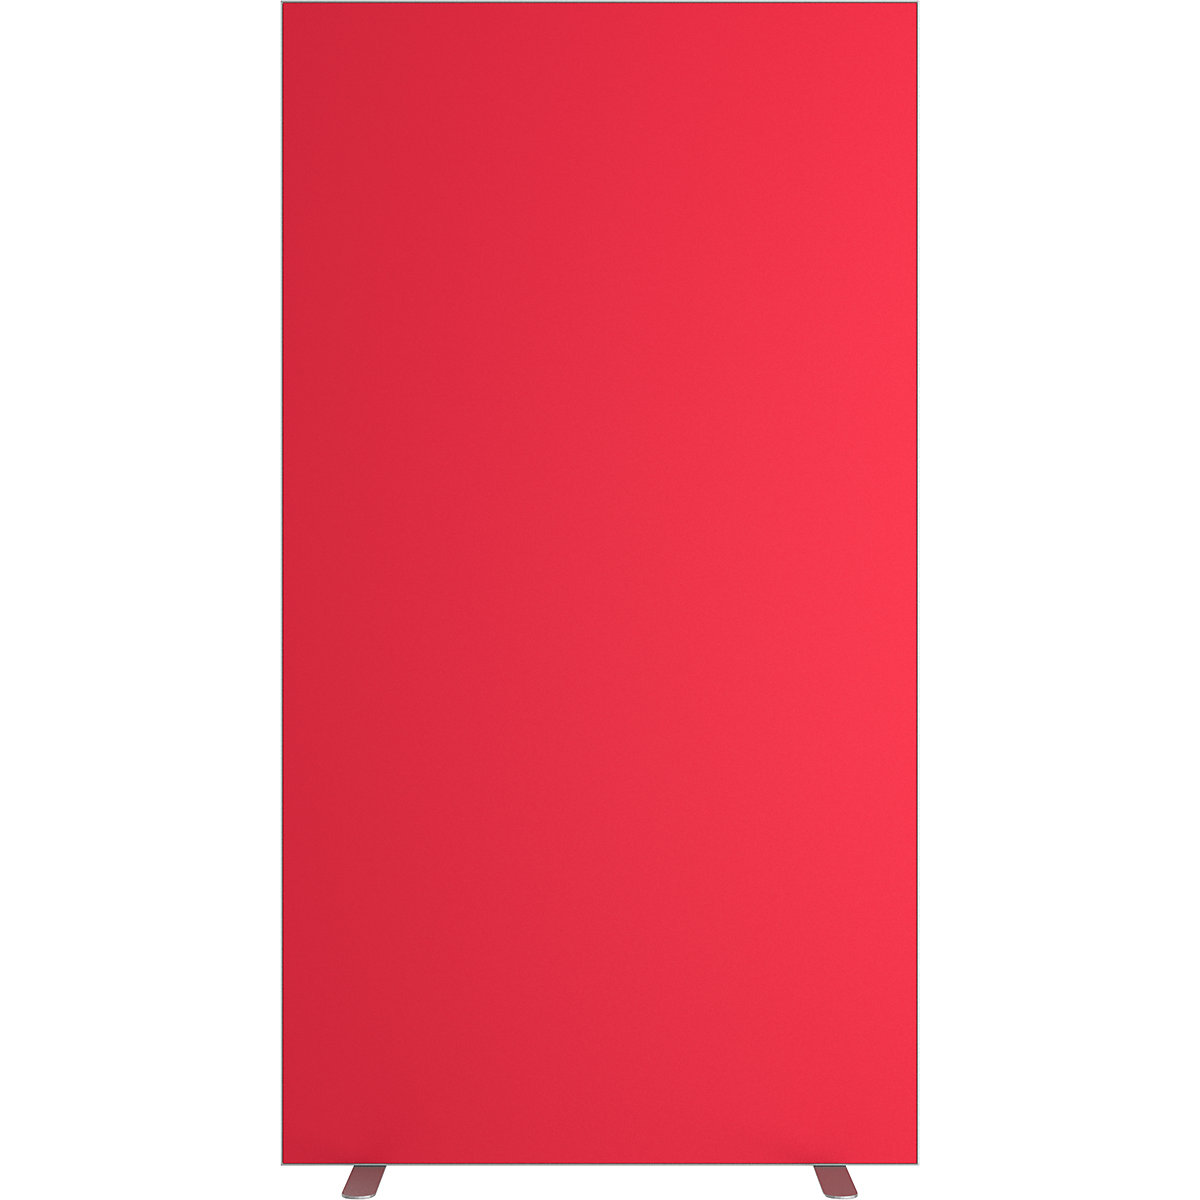 Trennwand easyScreen, einfarbig, rot, Breite 940 mm-7